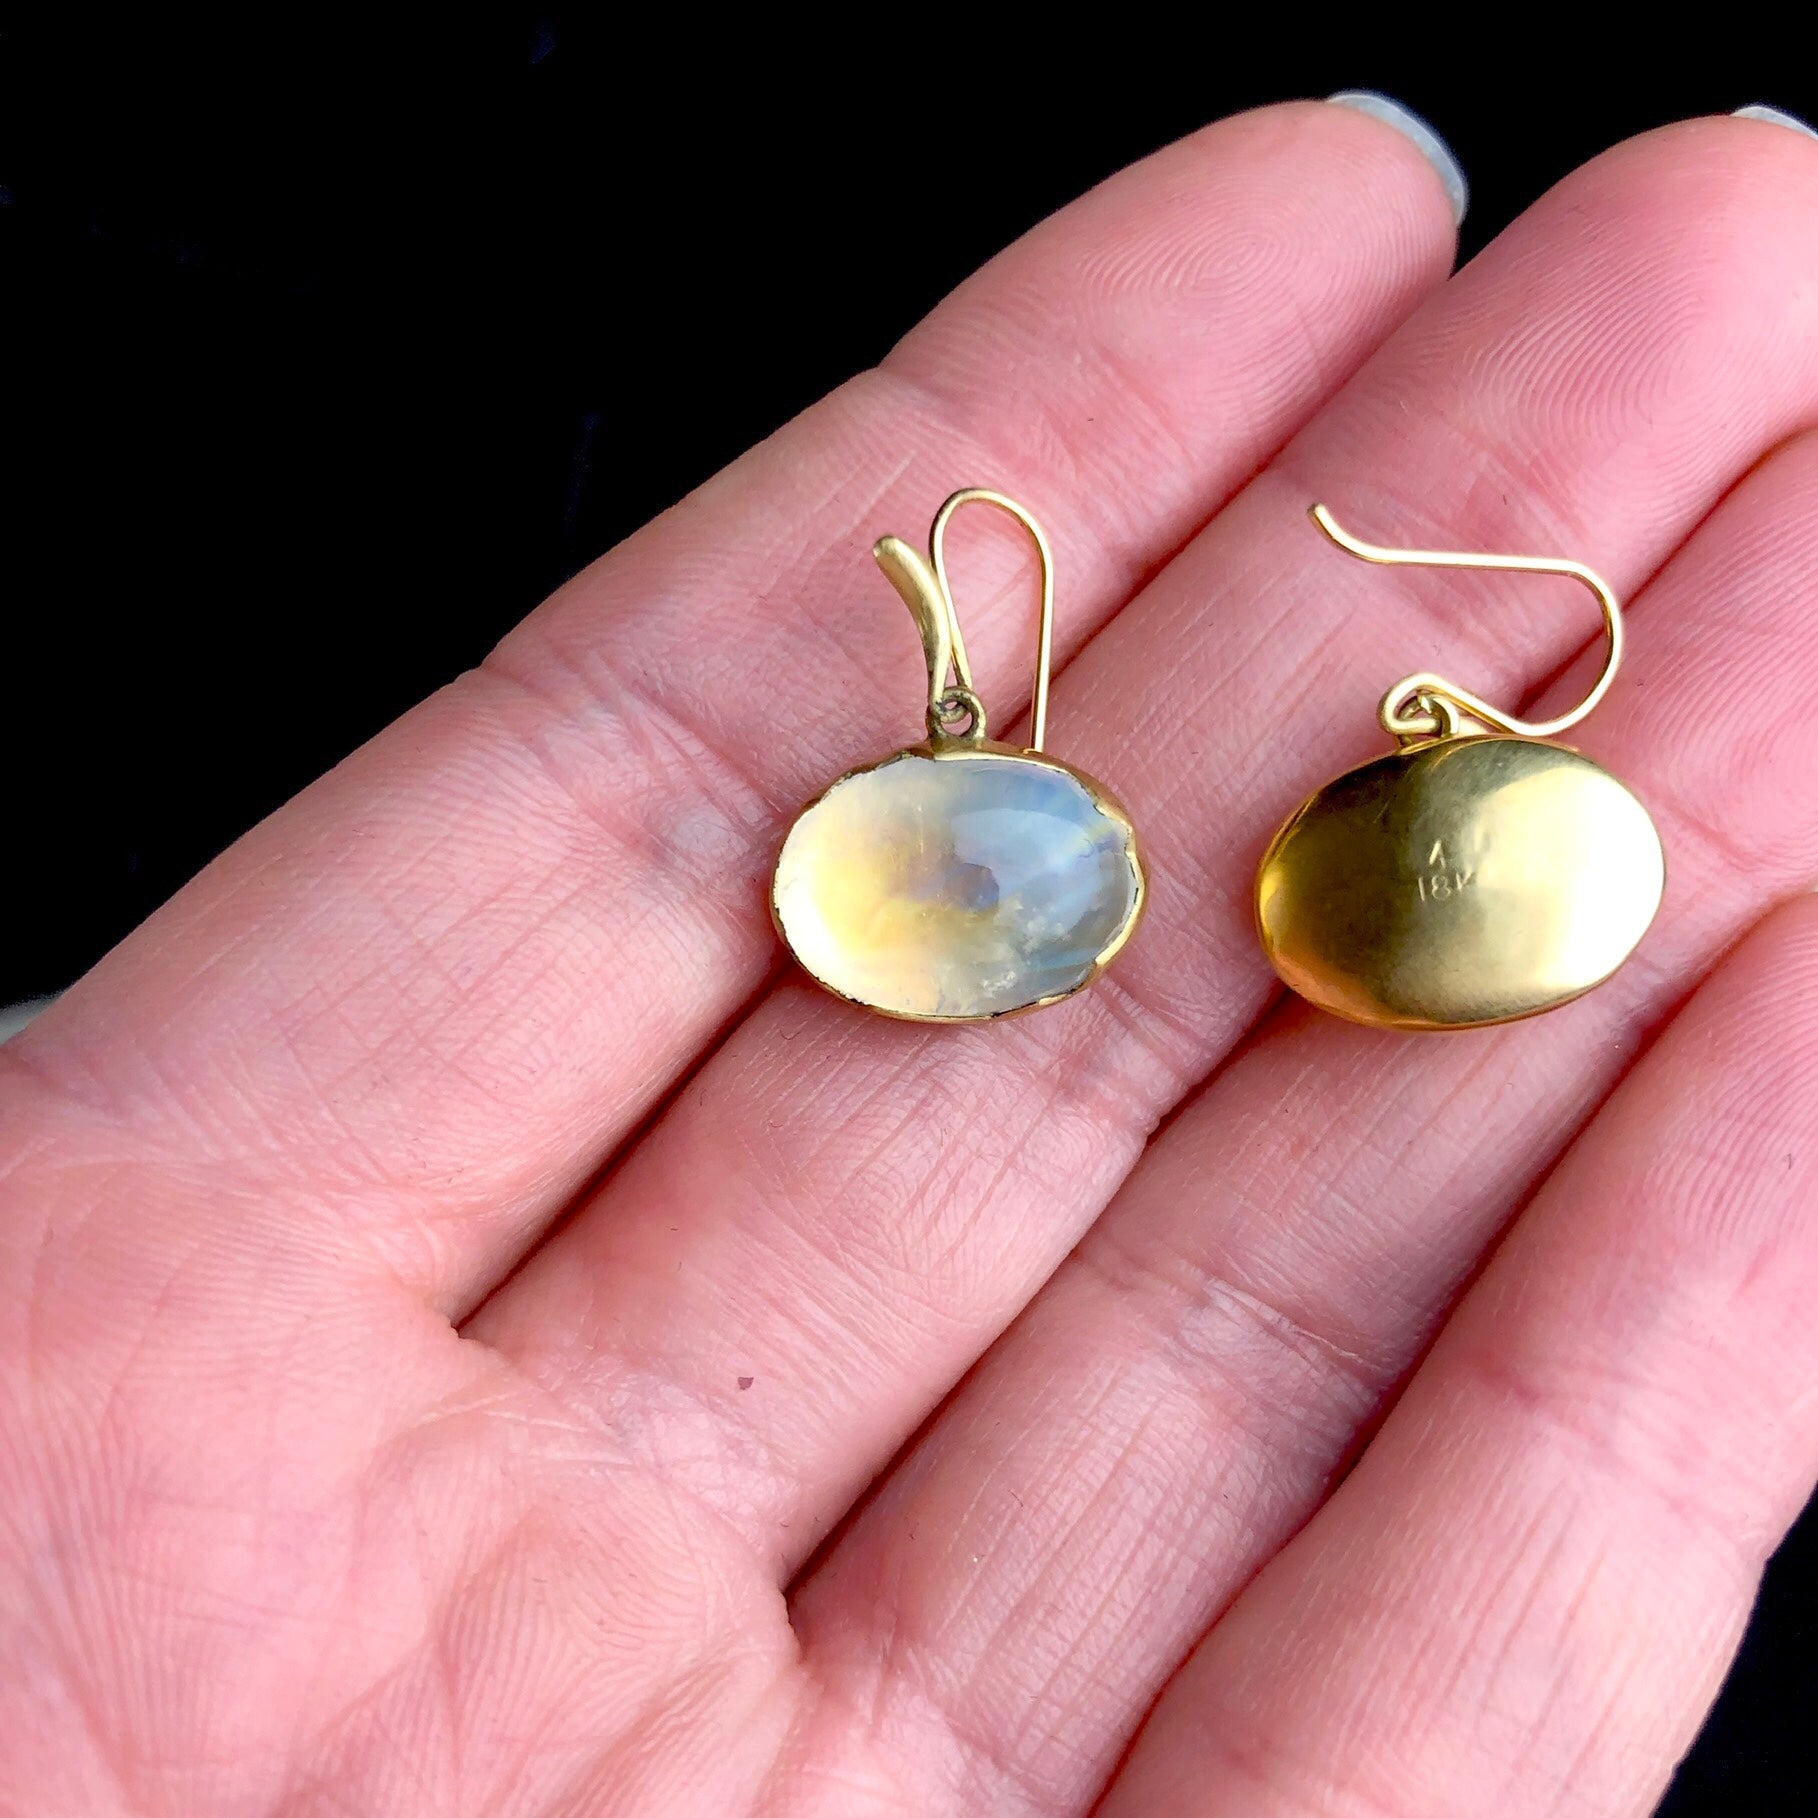 Rainbow Moonstone Eggshell Earrings shown in hand